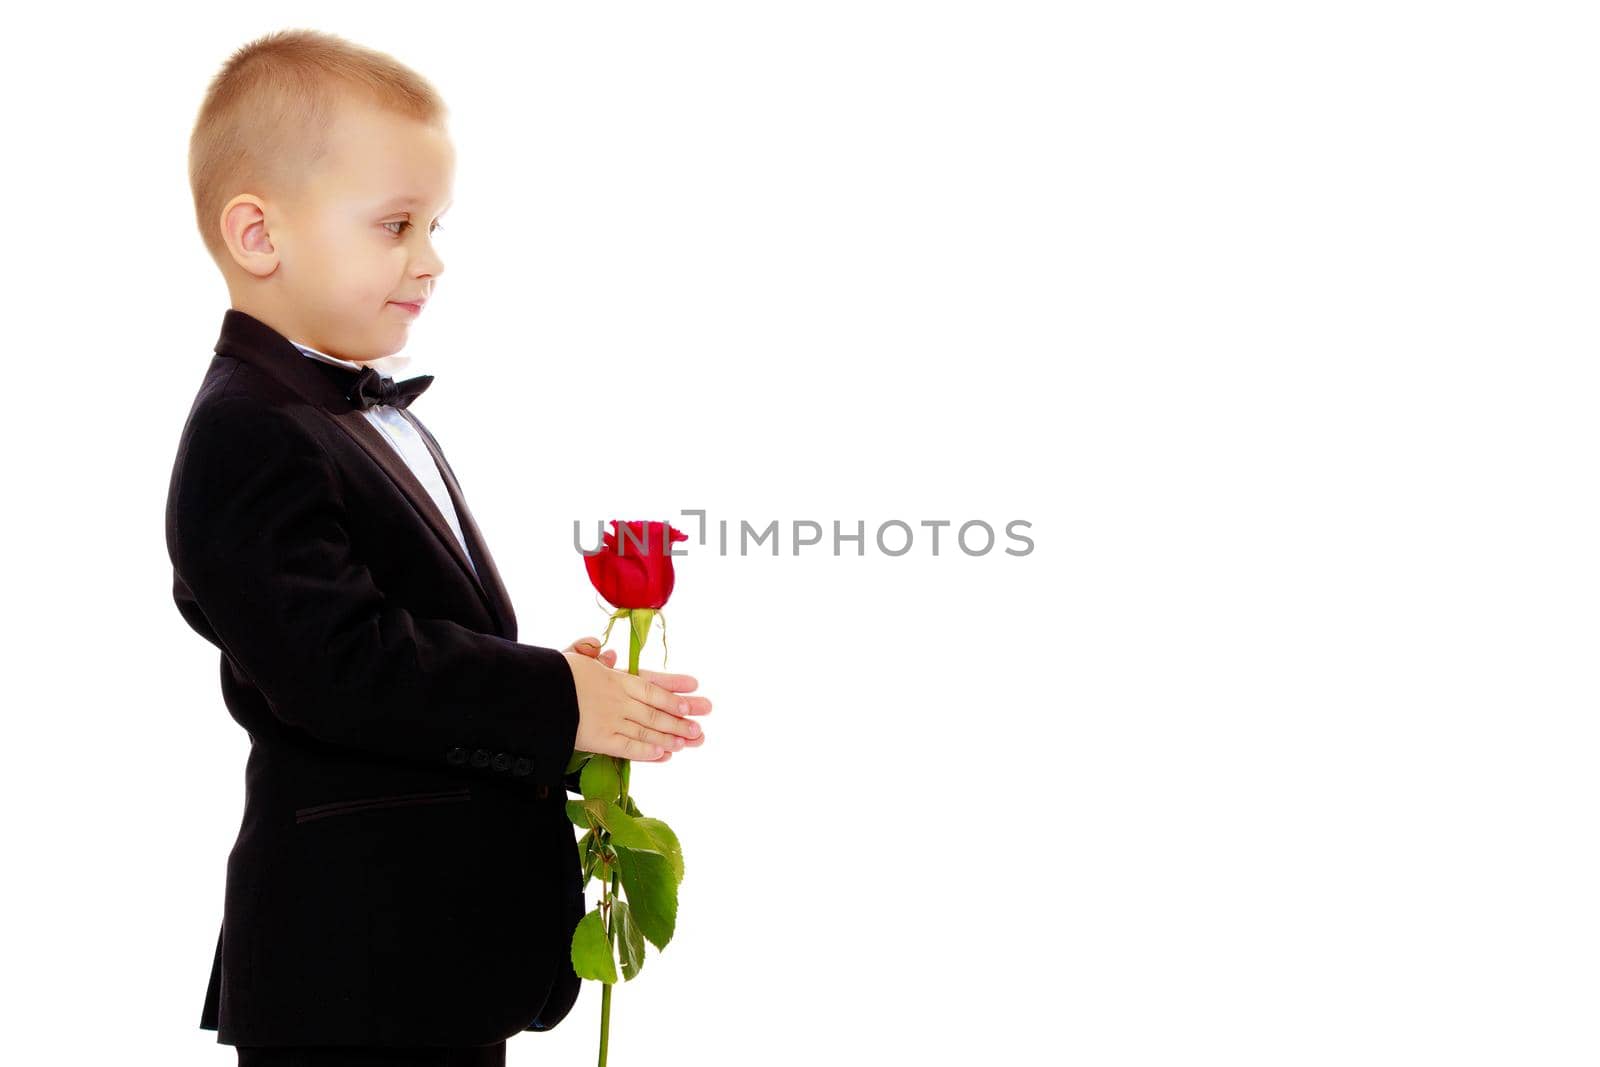 The boy gives the girl a flower. by kolesnikov_studio